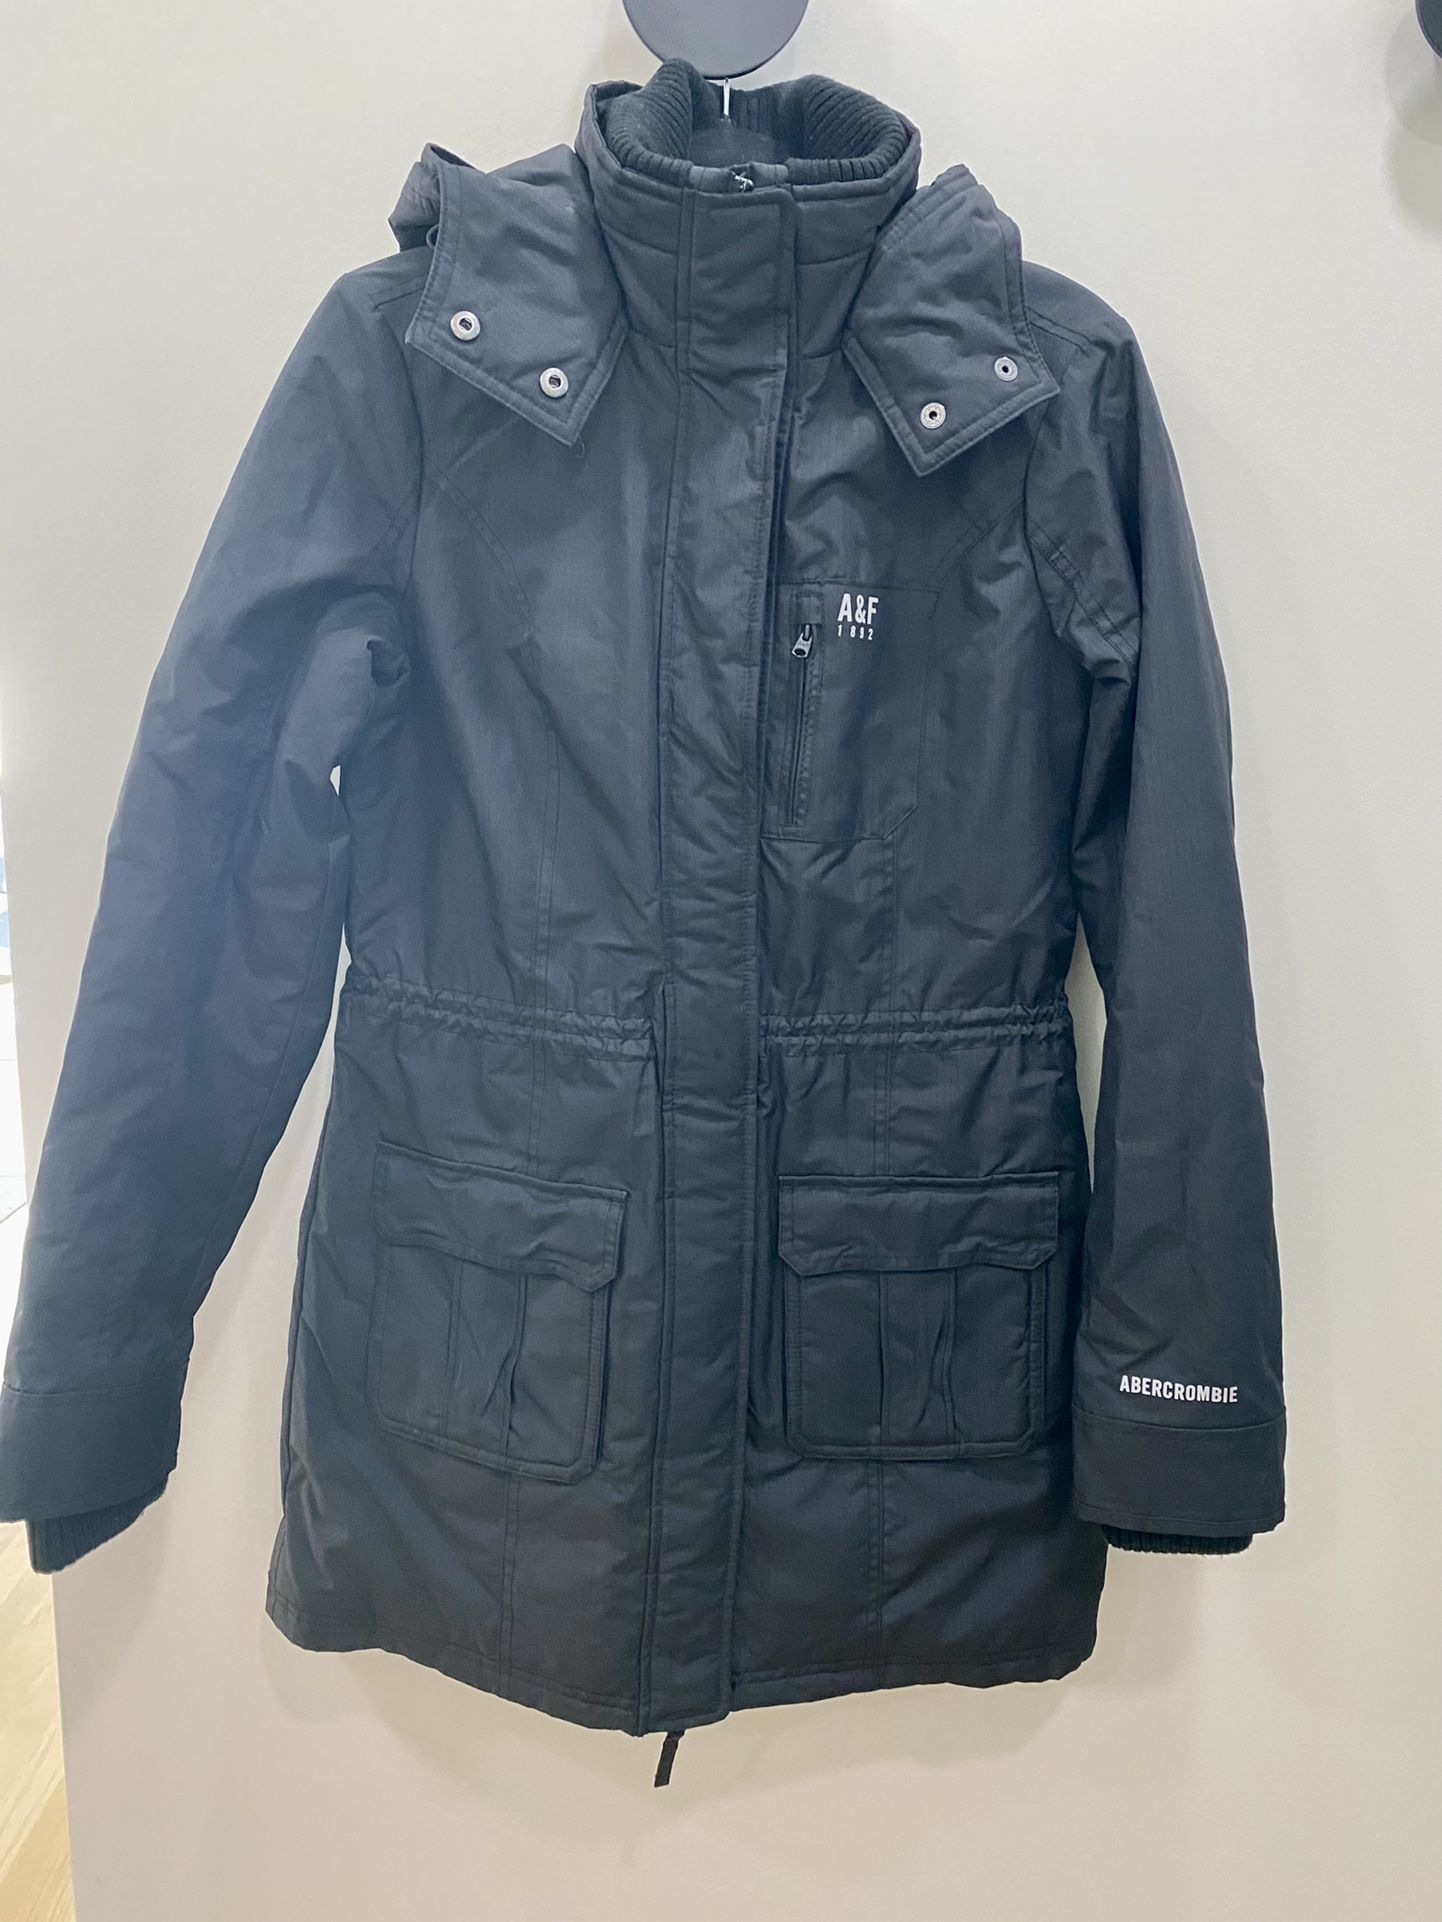 Abercrombie & Fitch Winter/Rain/Snow jacket